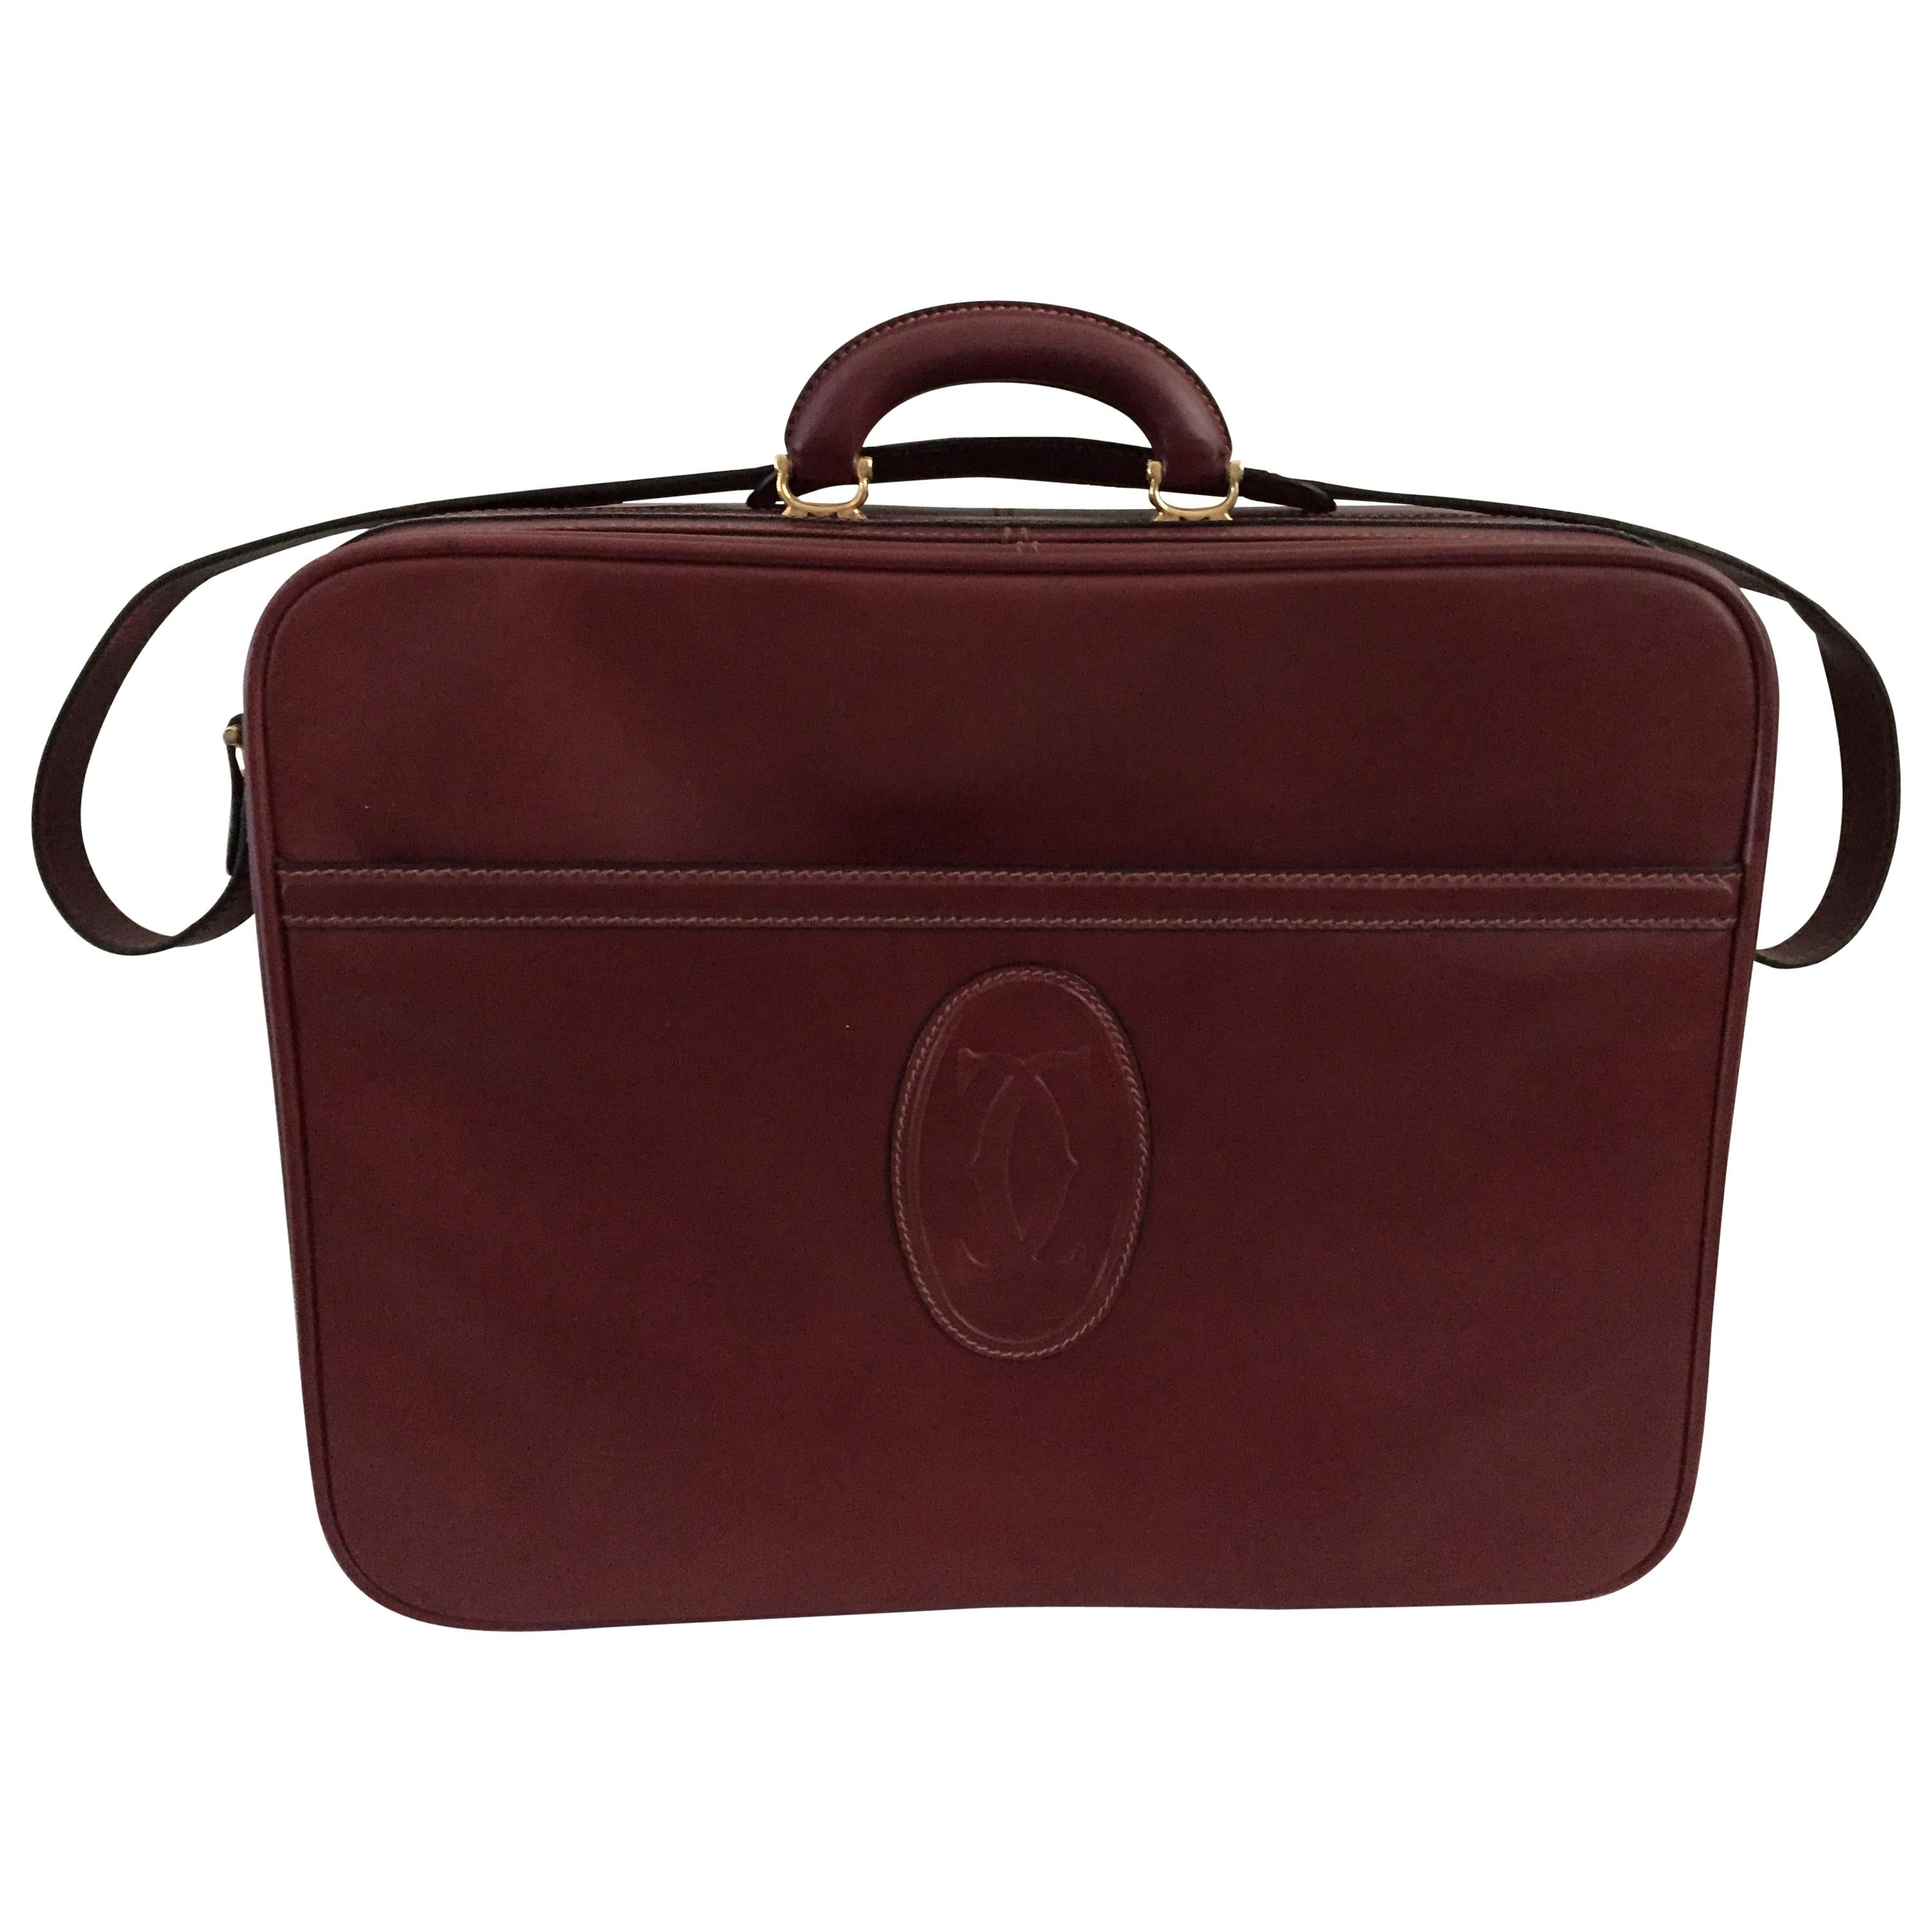 Cartier Les Must de Cartier Burgundy Leather Travel Overnight Suitcase / Luggage